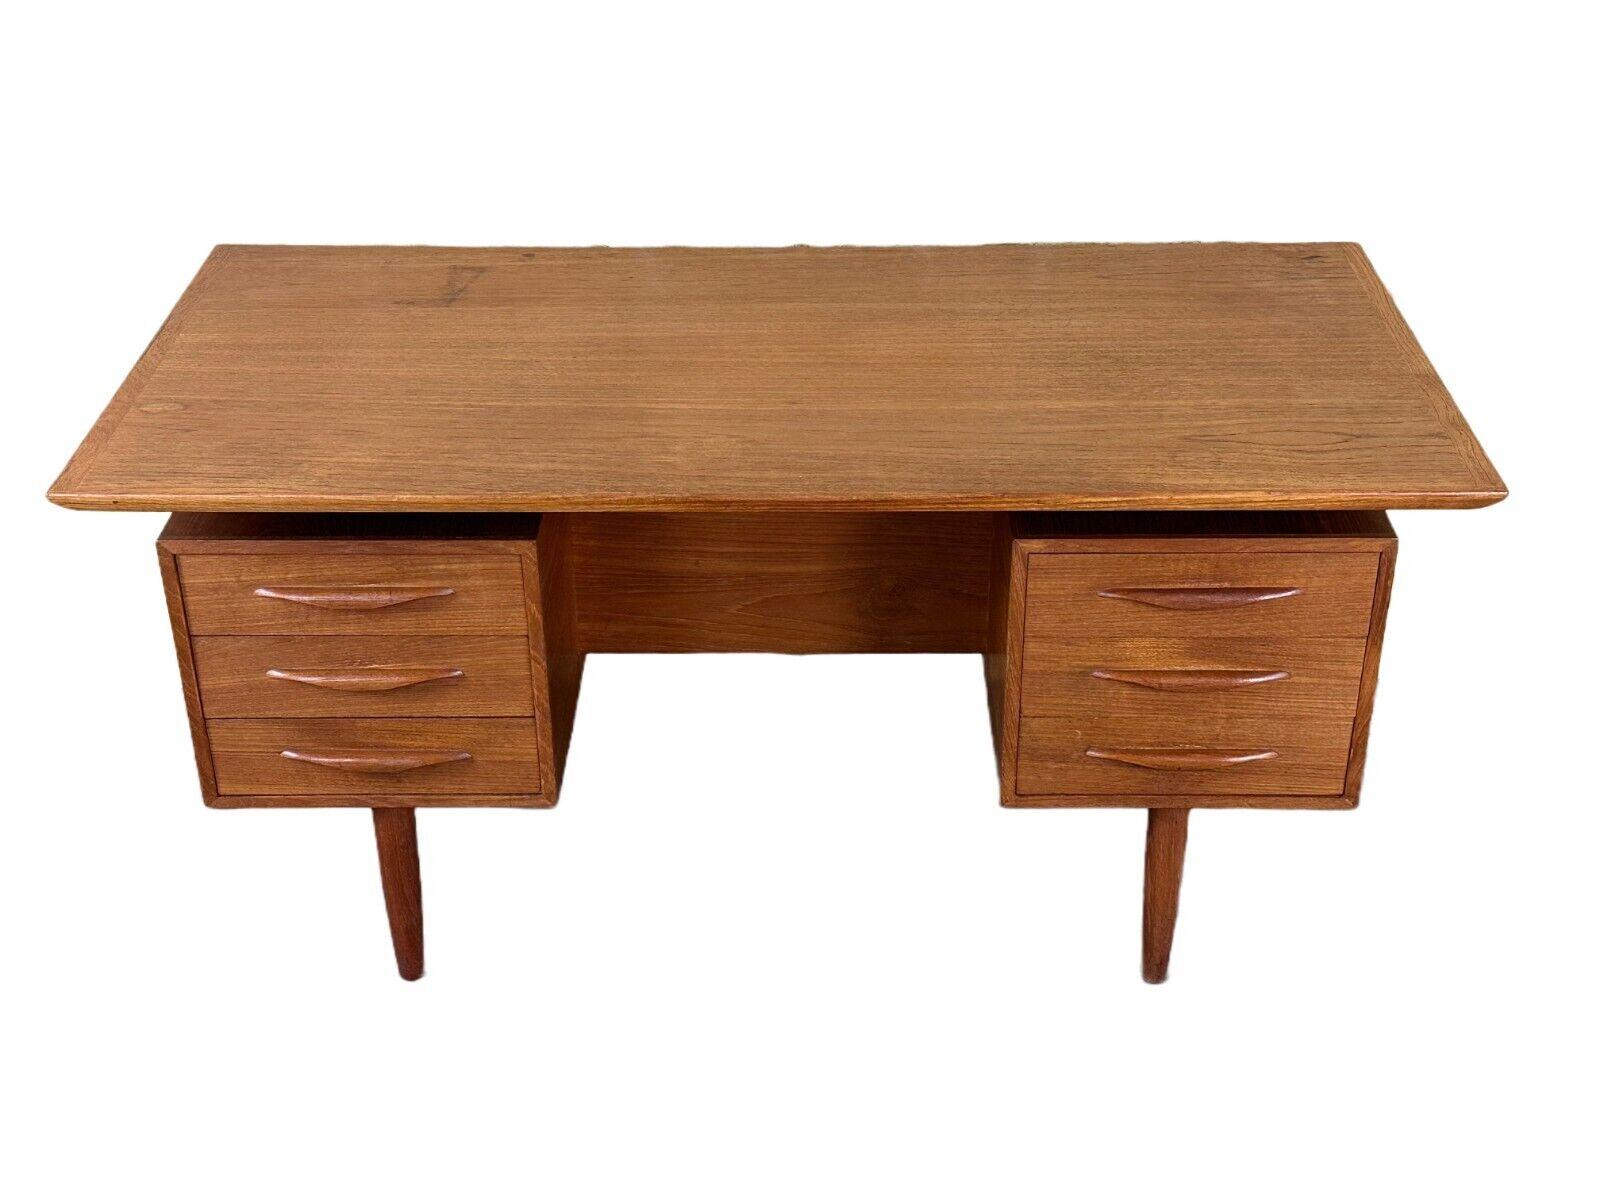 60s 70s teak desk desk Danish Modern Design Denmark

Object: desk

Manufacturer:

Condition: Good - Vintage

Age: around 1960-1970

Dimensions:

Width = 144.5cm
Depth = 68.5cm
Height = 72.5cm

Other notes:

The pictures serve as part of the